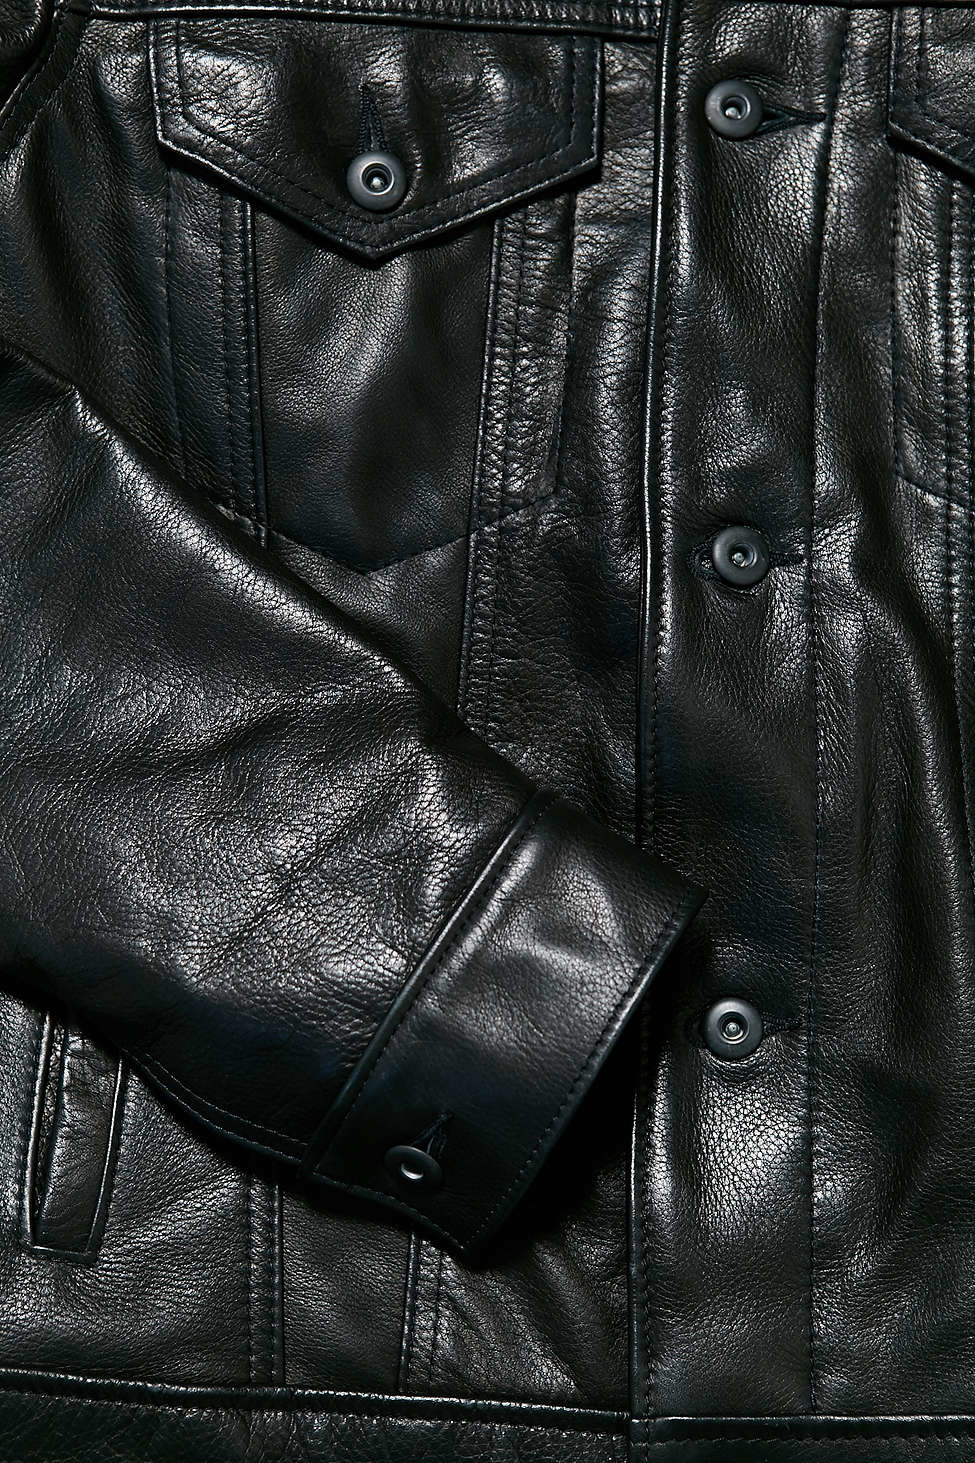 Lyst - Schott Nyc Leather Trucker Jacket in Black for Men